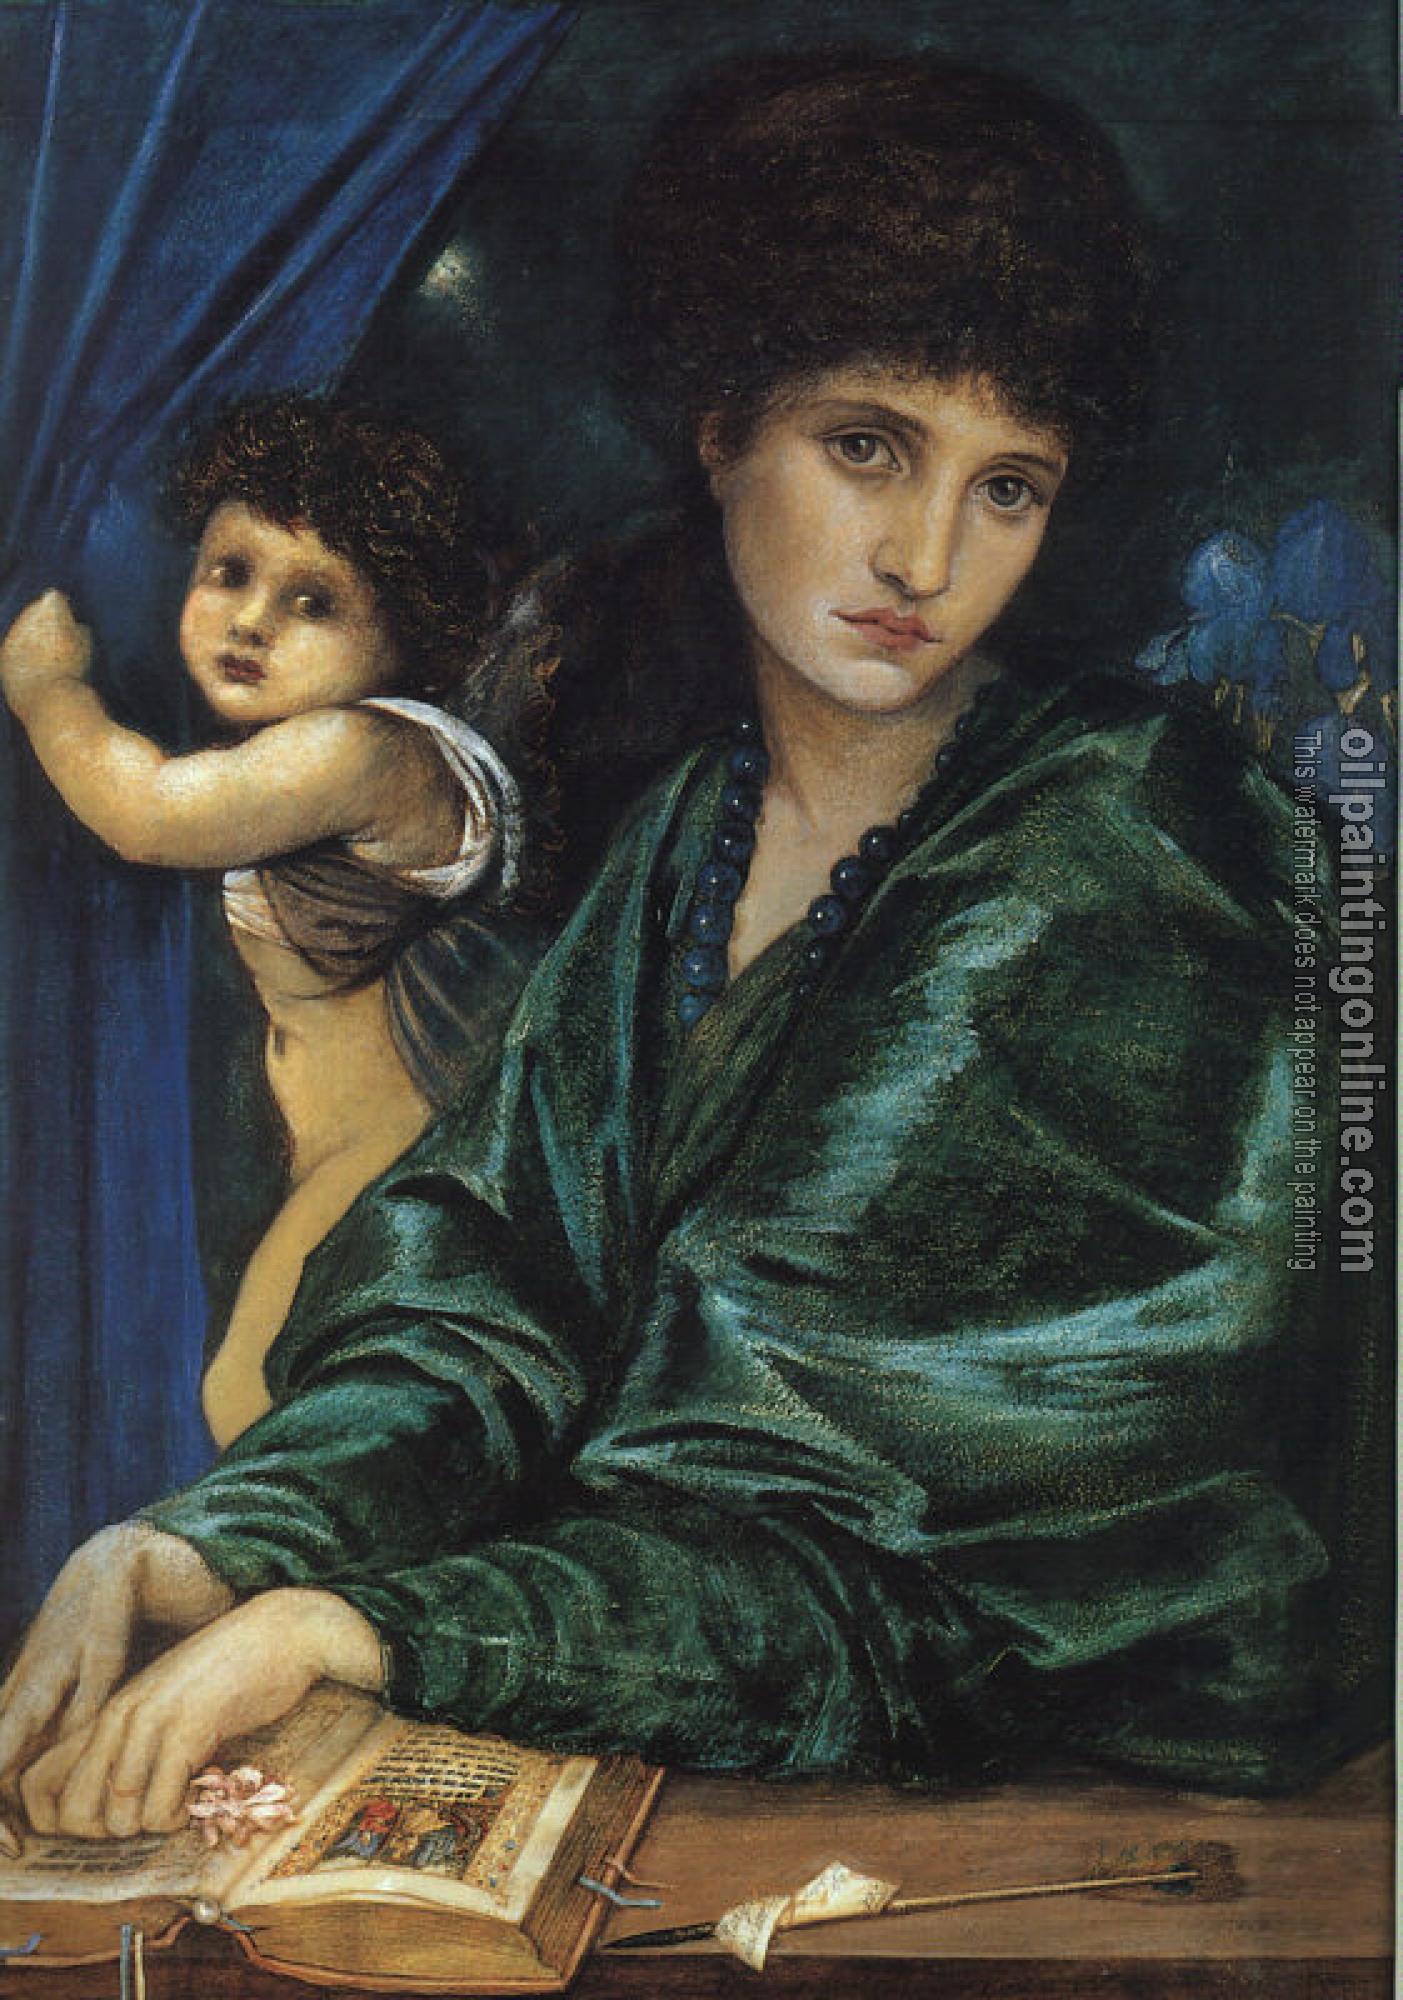 Burne-Jones, Sir Edward Coley - Portrait of Maria Zambaco